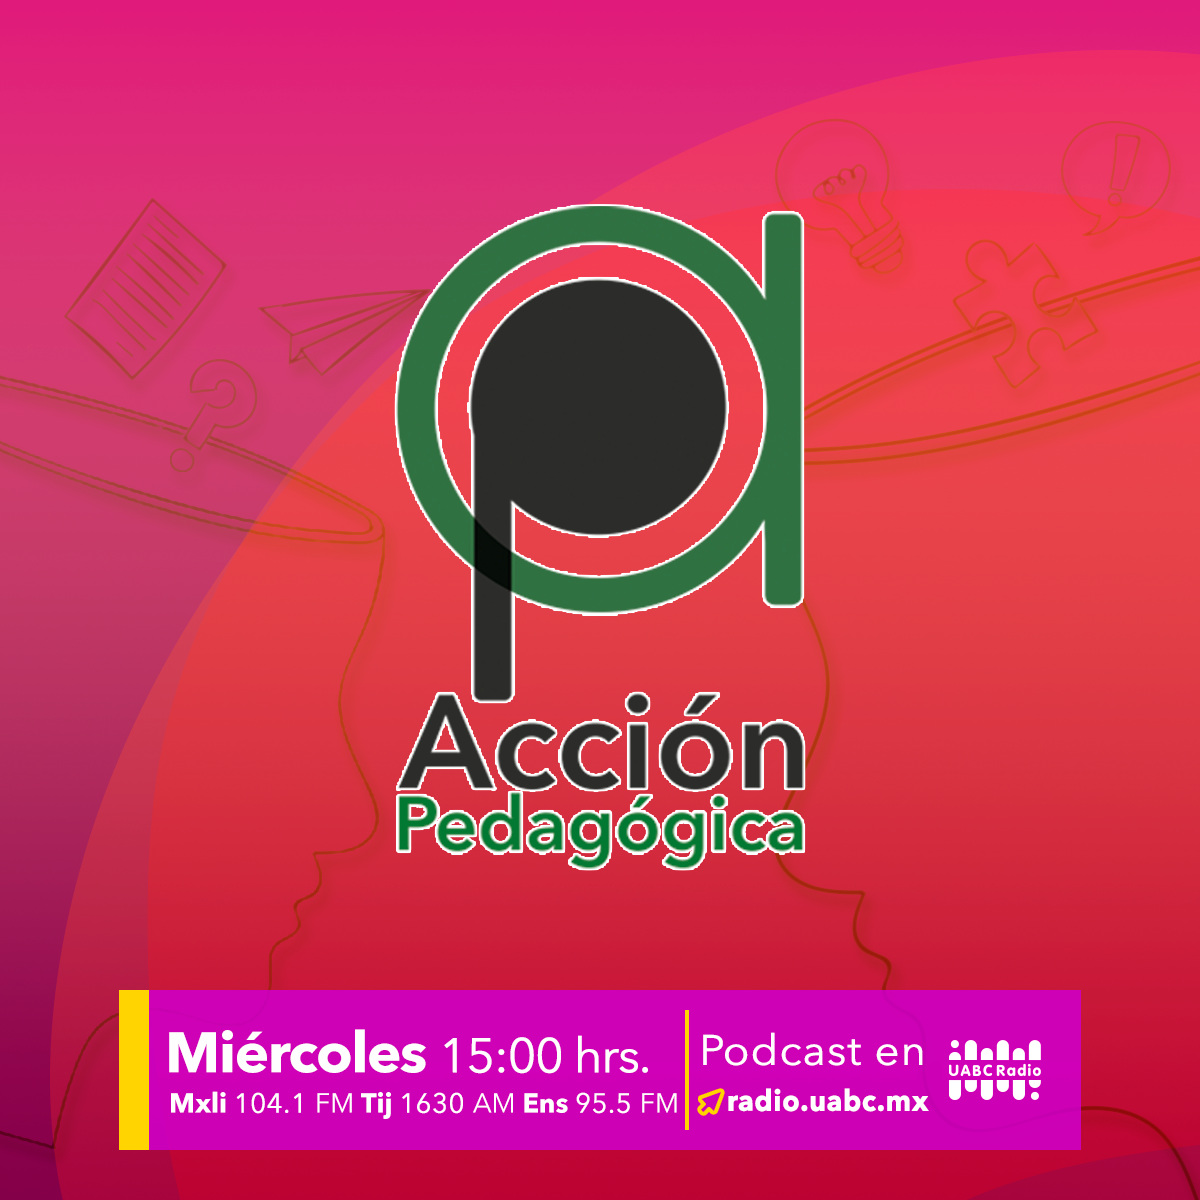 Aceion
Qgoglica

| Miércoles 15:00 hrs.

Mxli 104.1 FM Tij 1630 AM Ens 95.5 FM

Podcast en :ifatan

Radio
Jradio.uabc.mx 9°9°9°